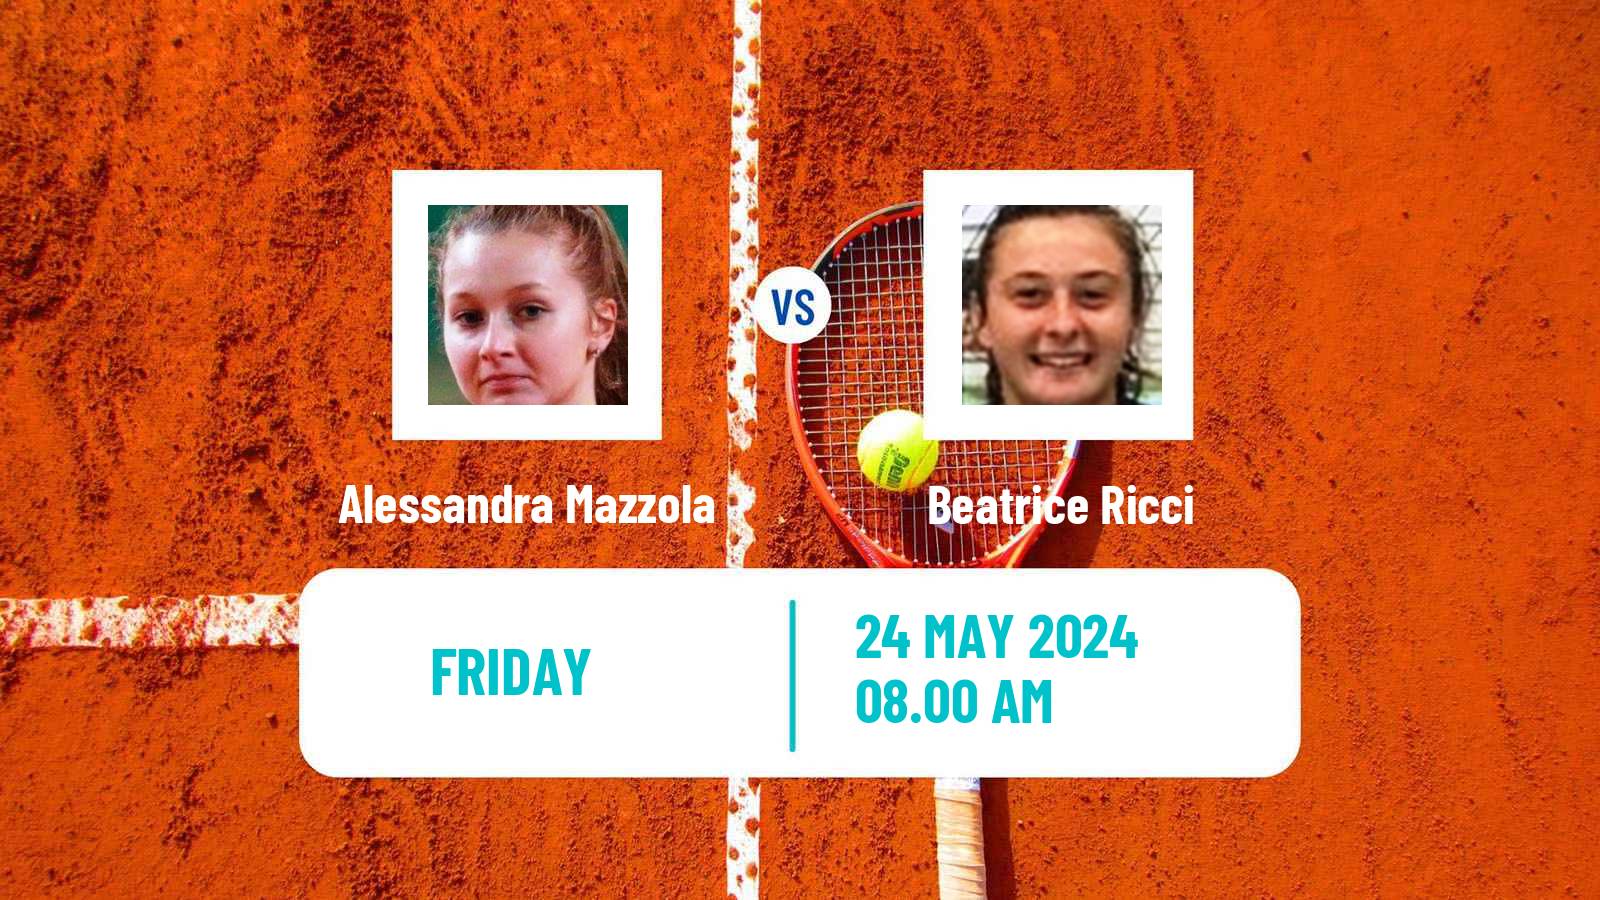 Tennis ITF W75 Grado Women Alessandra Mazzola - Beatrice Ricci